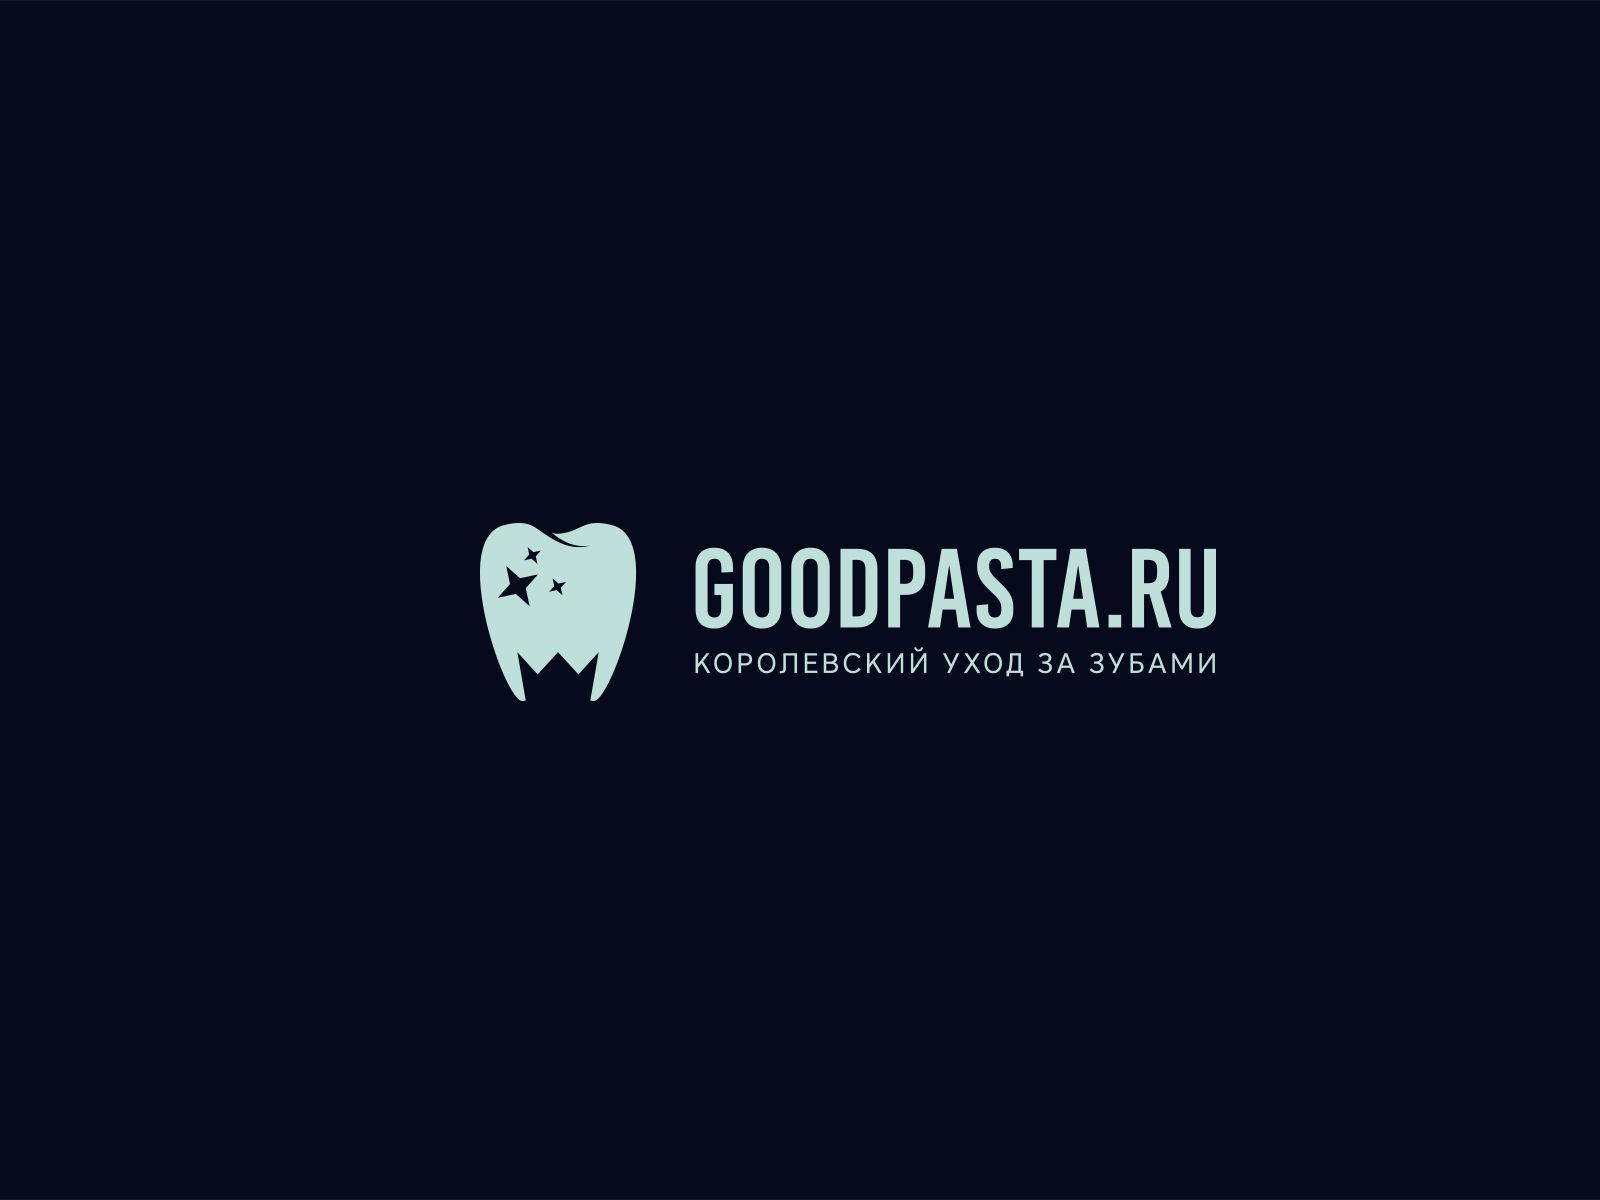 Логотип для интернет-магазина goodpasta.ru - дизайнер U4po4mak